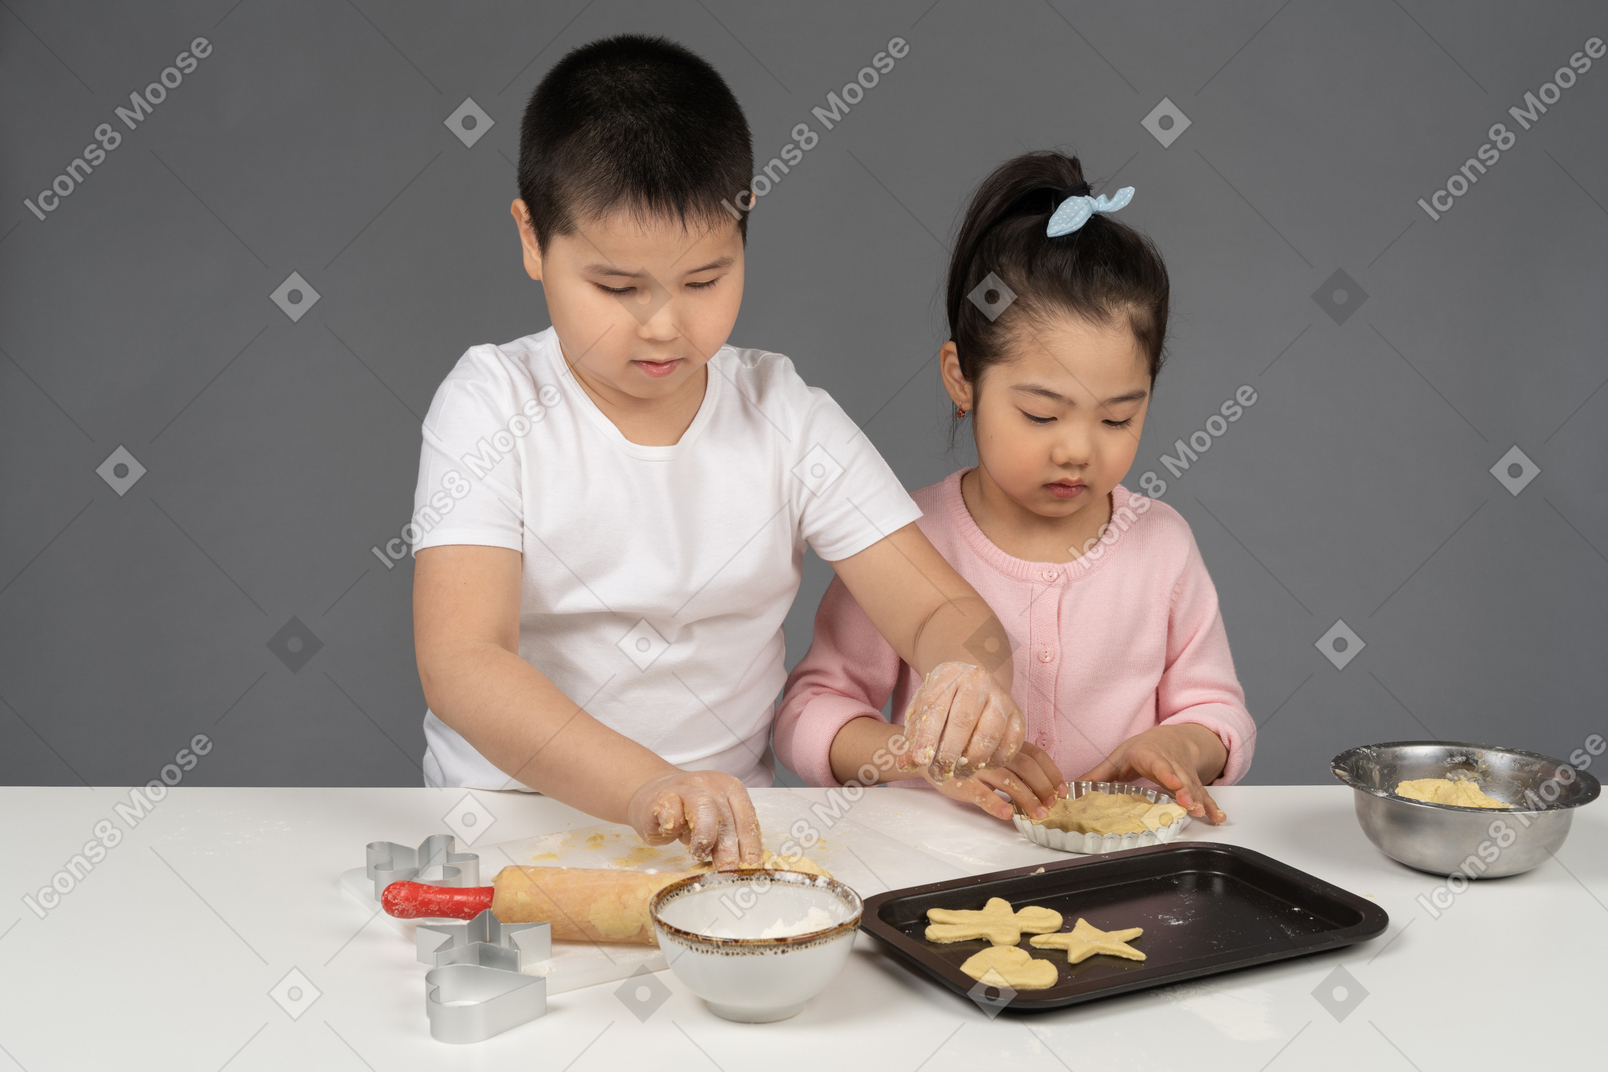 Boy teching his sister to bake cookies